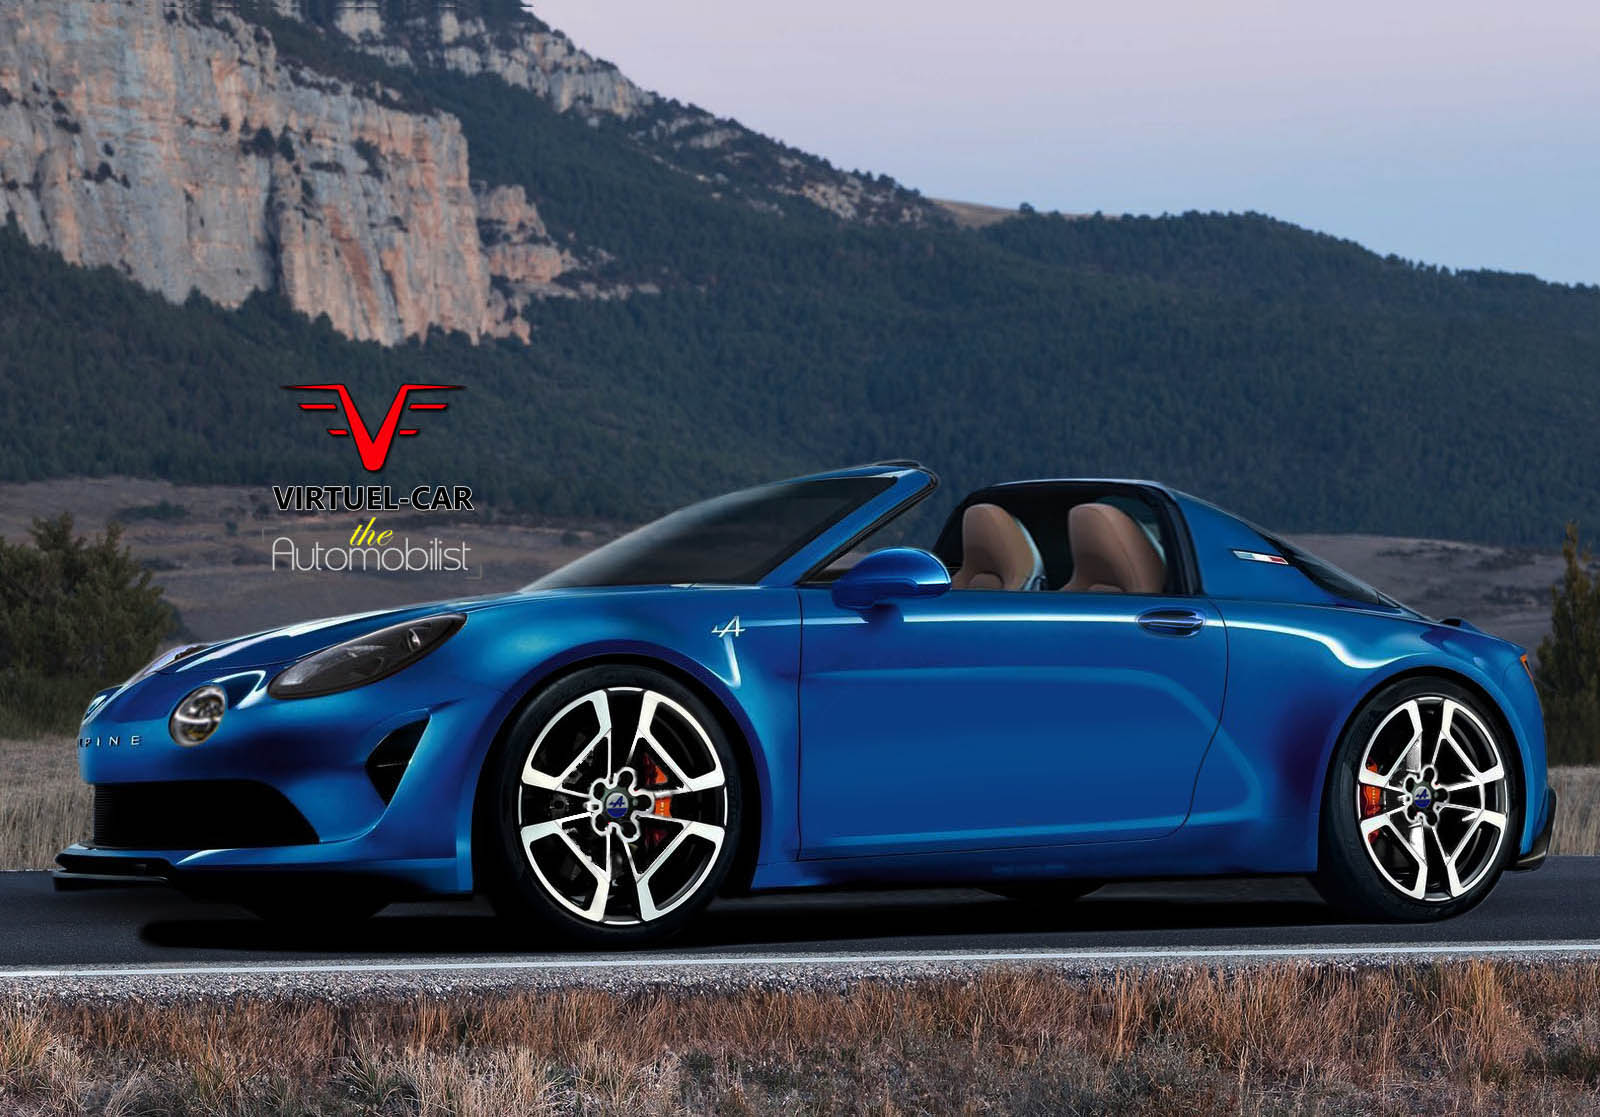 Alpine Vision Cabriolet - Virtuel Car